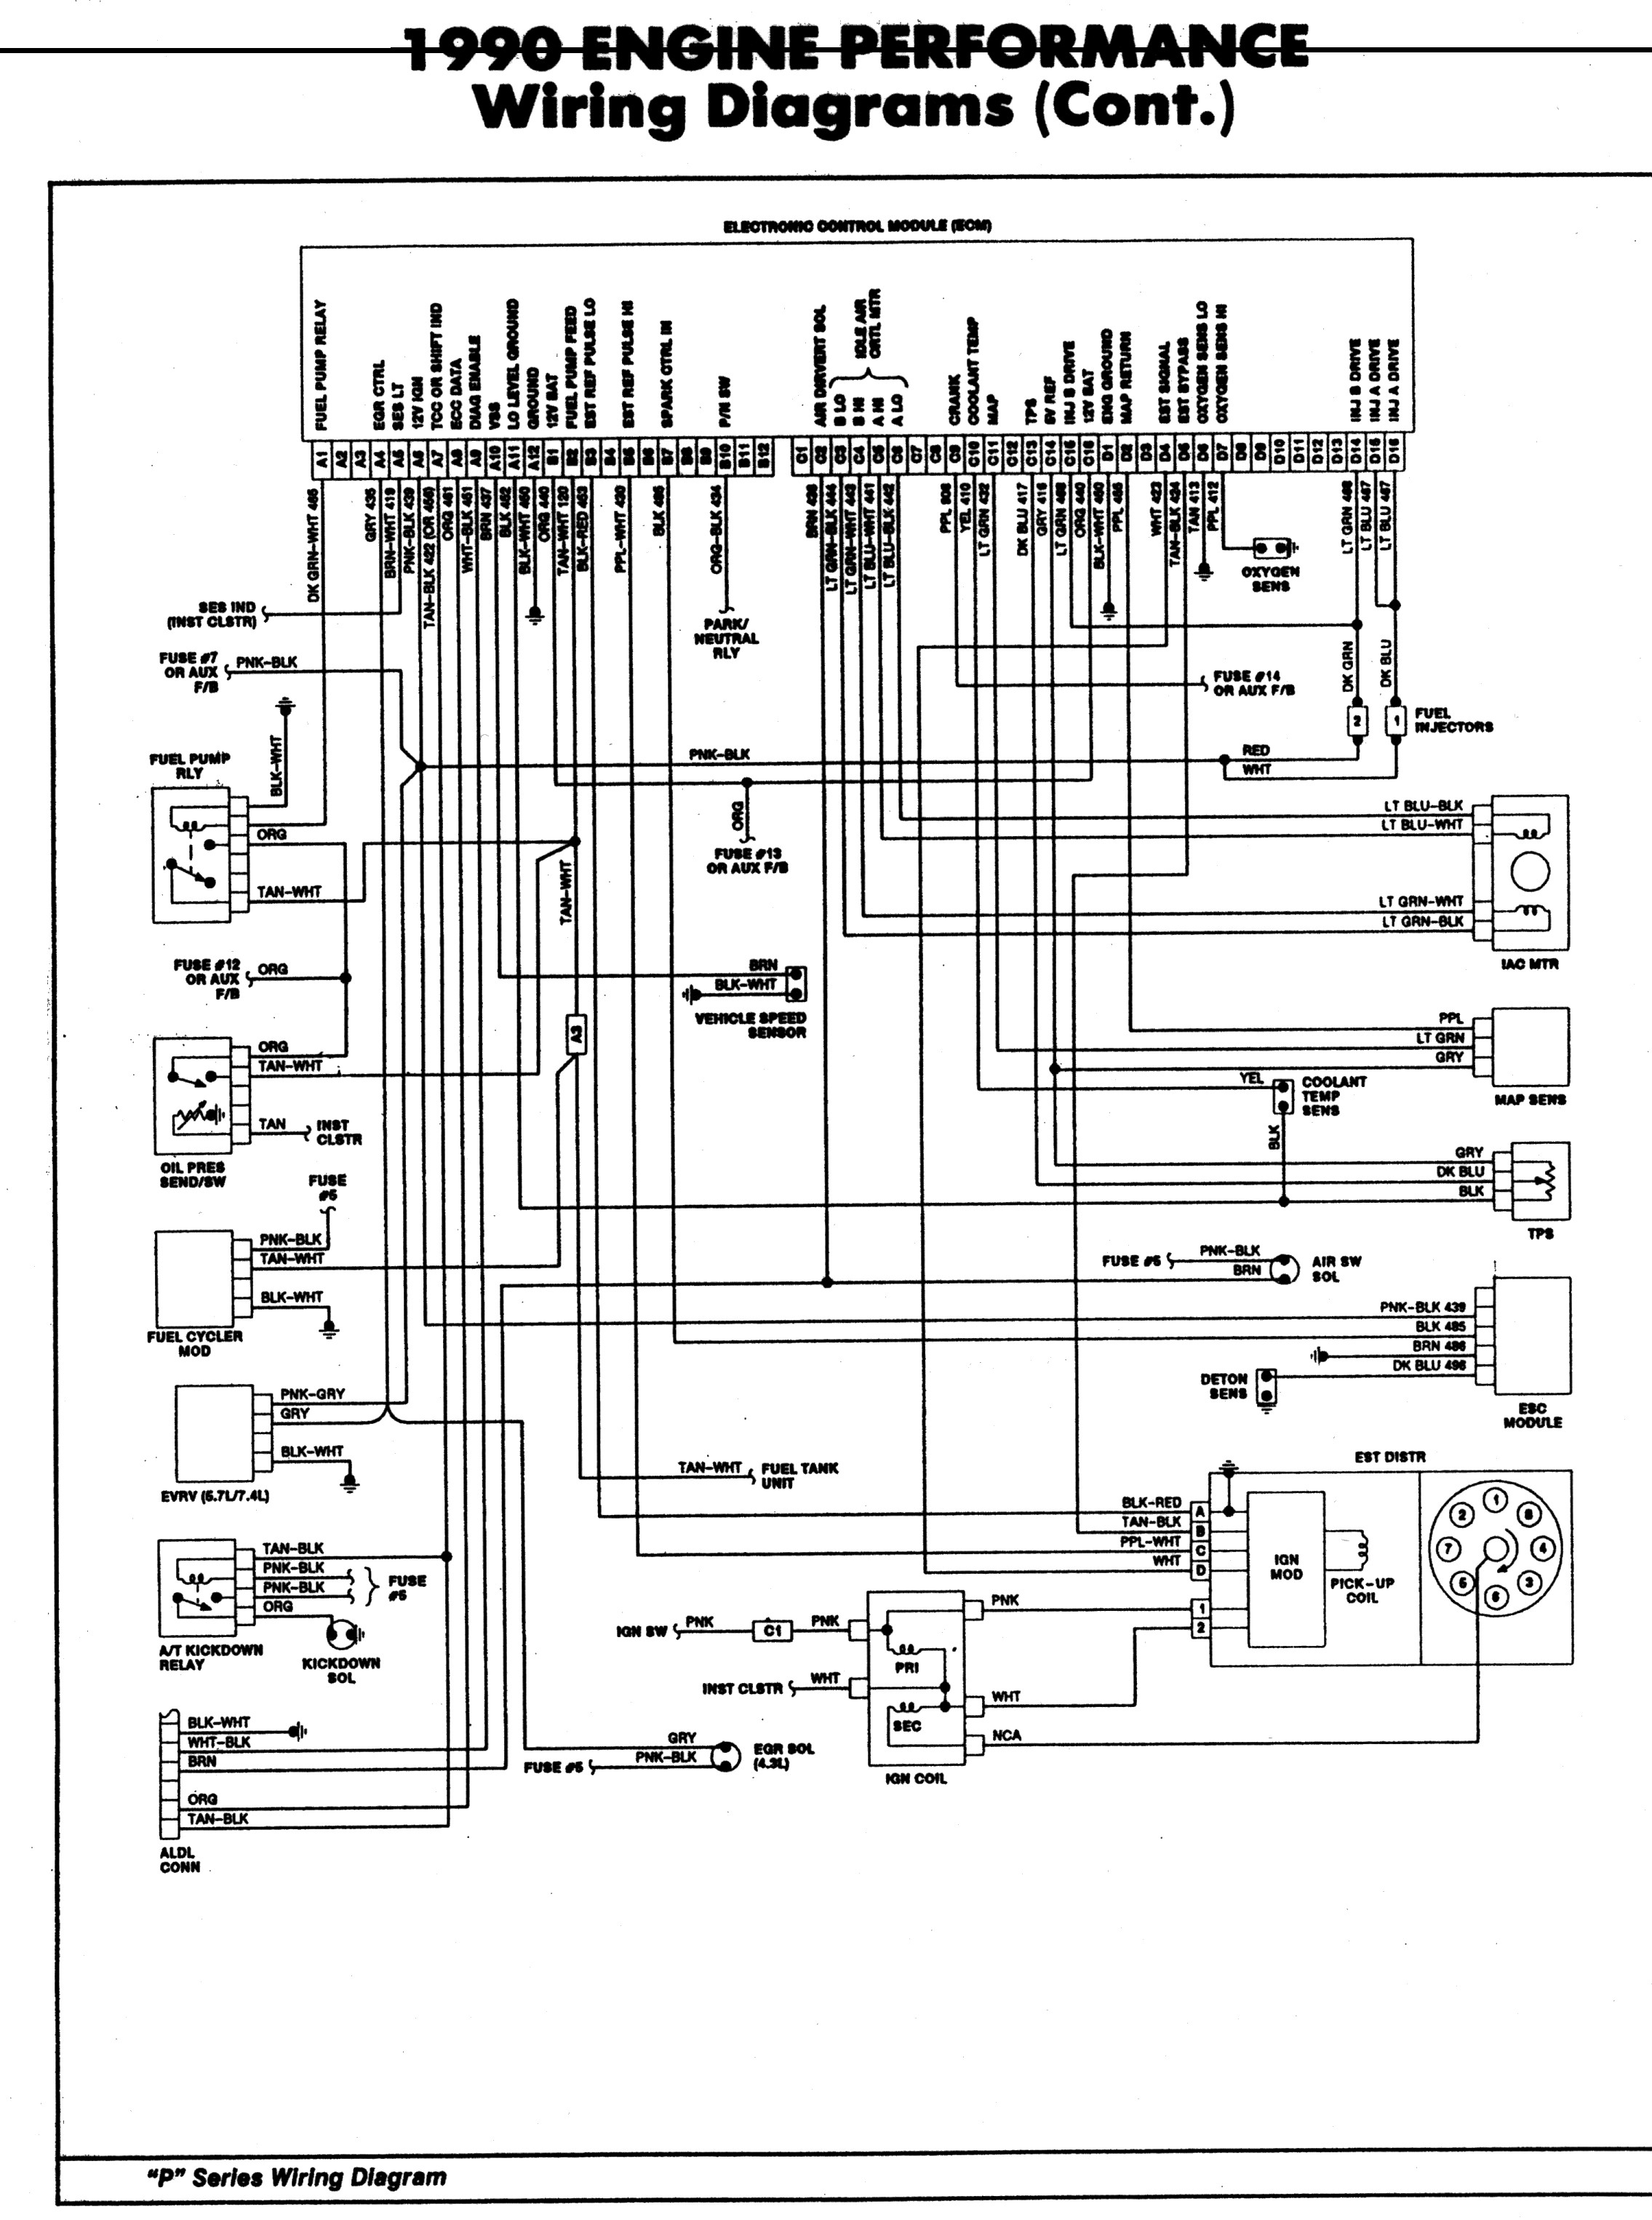 1998 Chevy S10 2 2 Engine Diagram 1998 Chevy Blazer Wiring Diagram Http Technoanswers Of 1998 Chevy S10 2 2 Engine Diagram